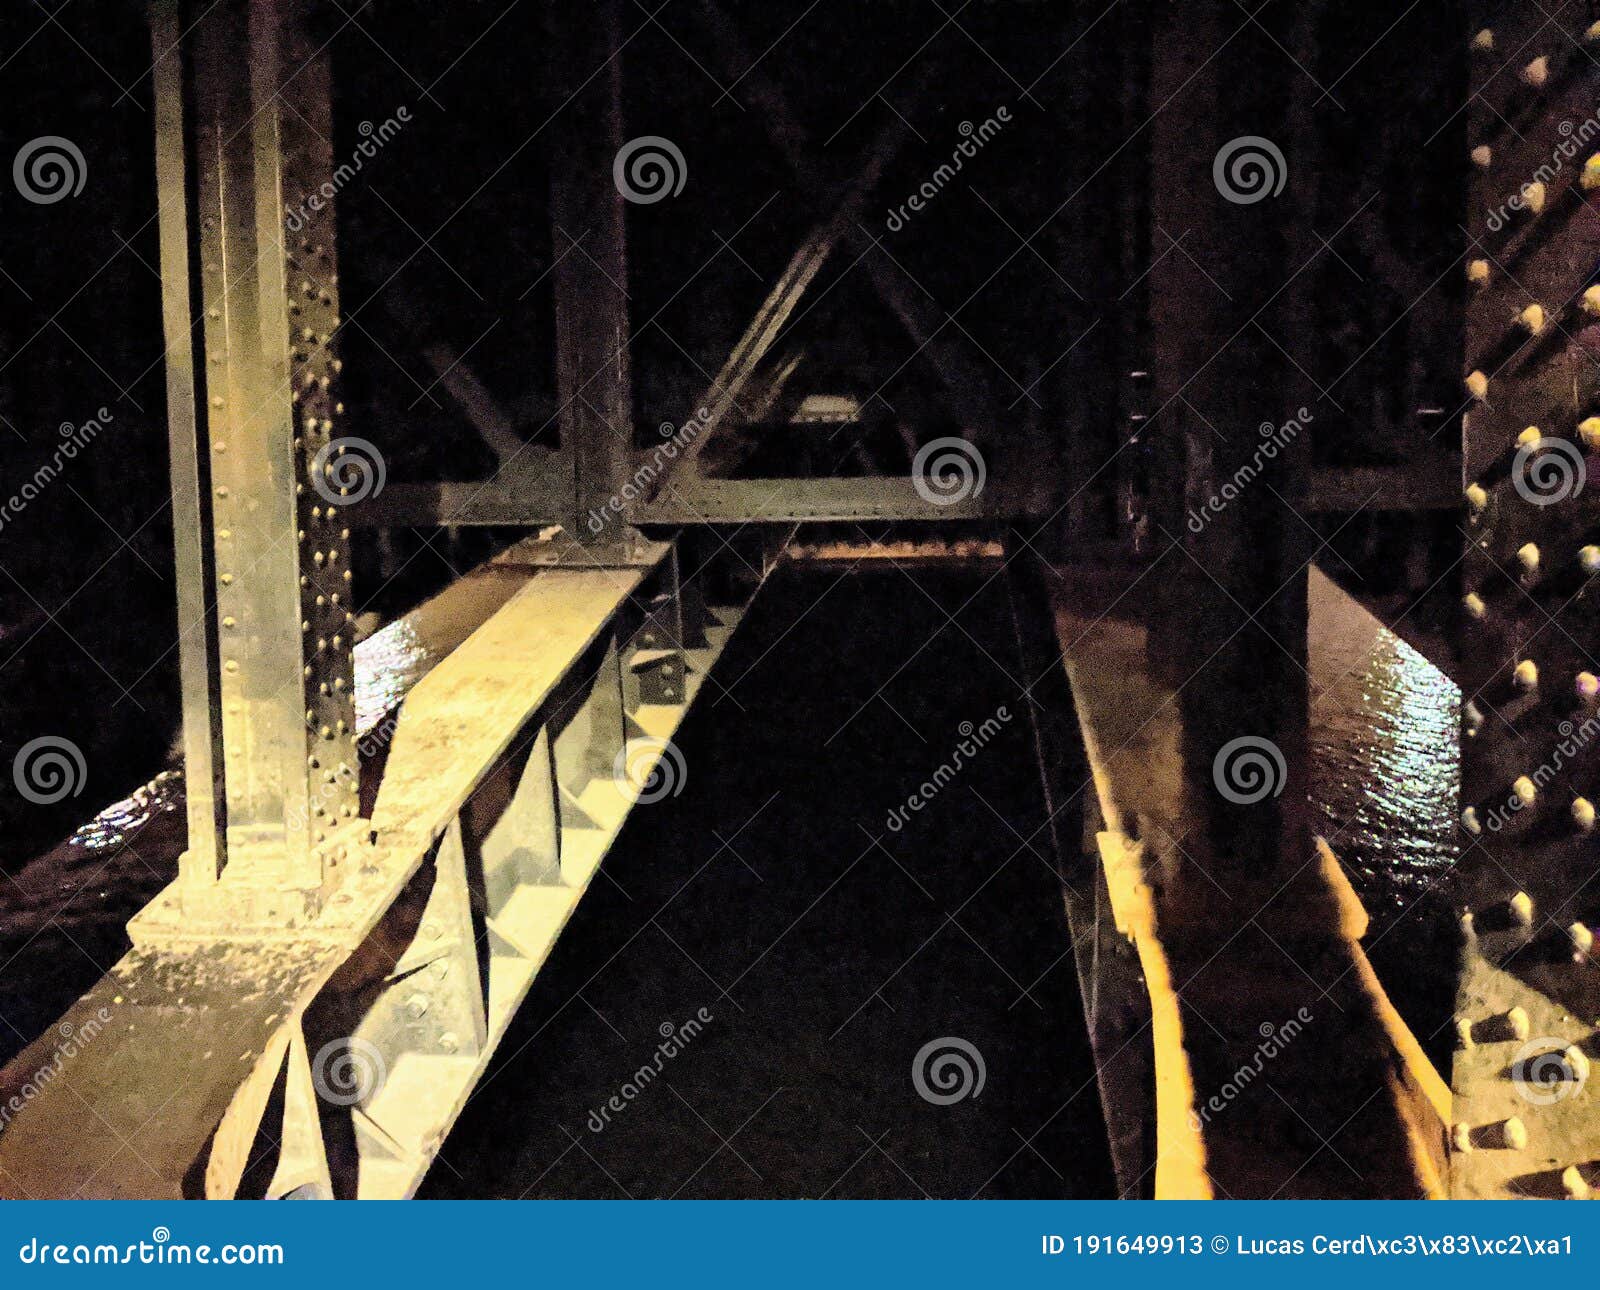 estructure bridge alejandre iii paris in france at night